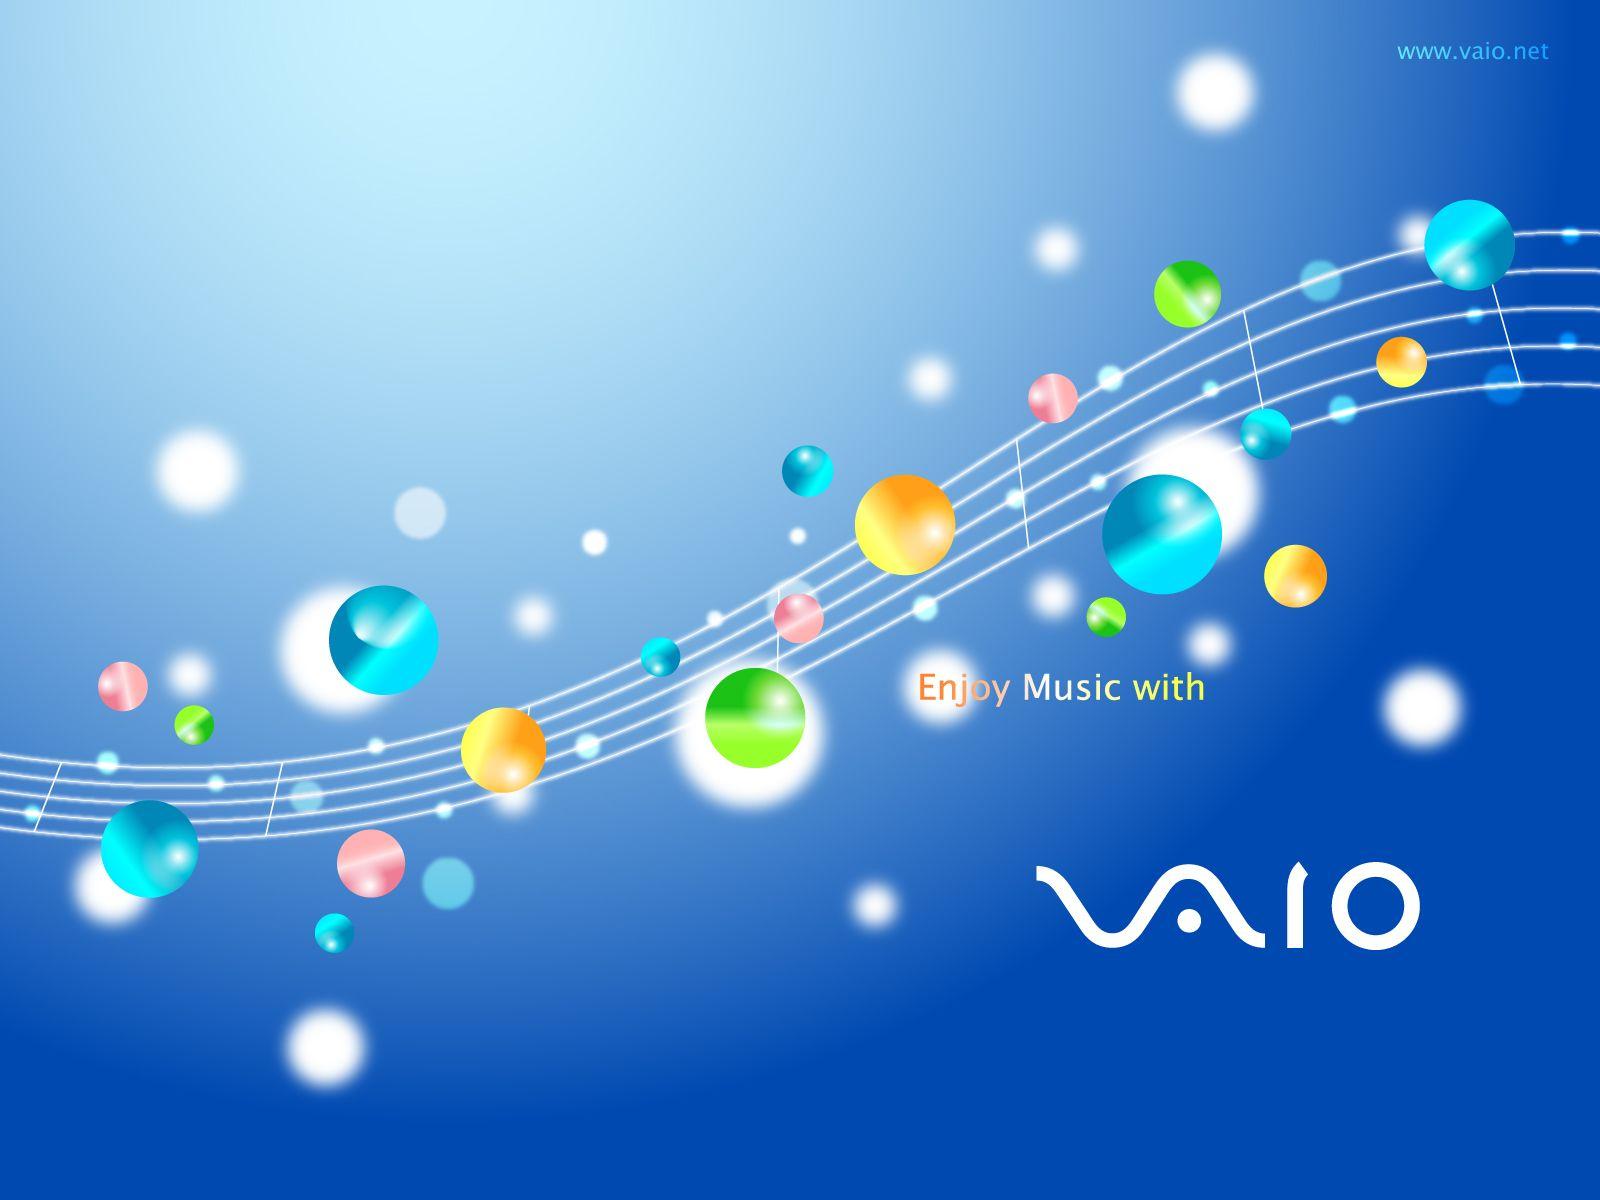 Sony Vaio Wallpaper HD. Freetopwallpaper